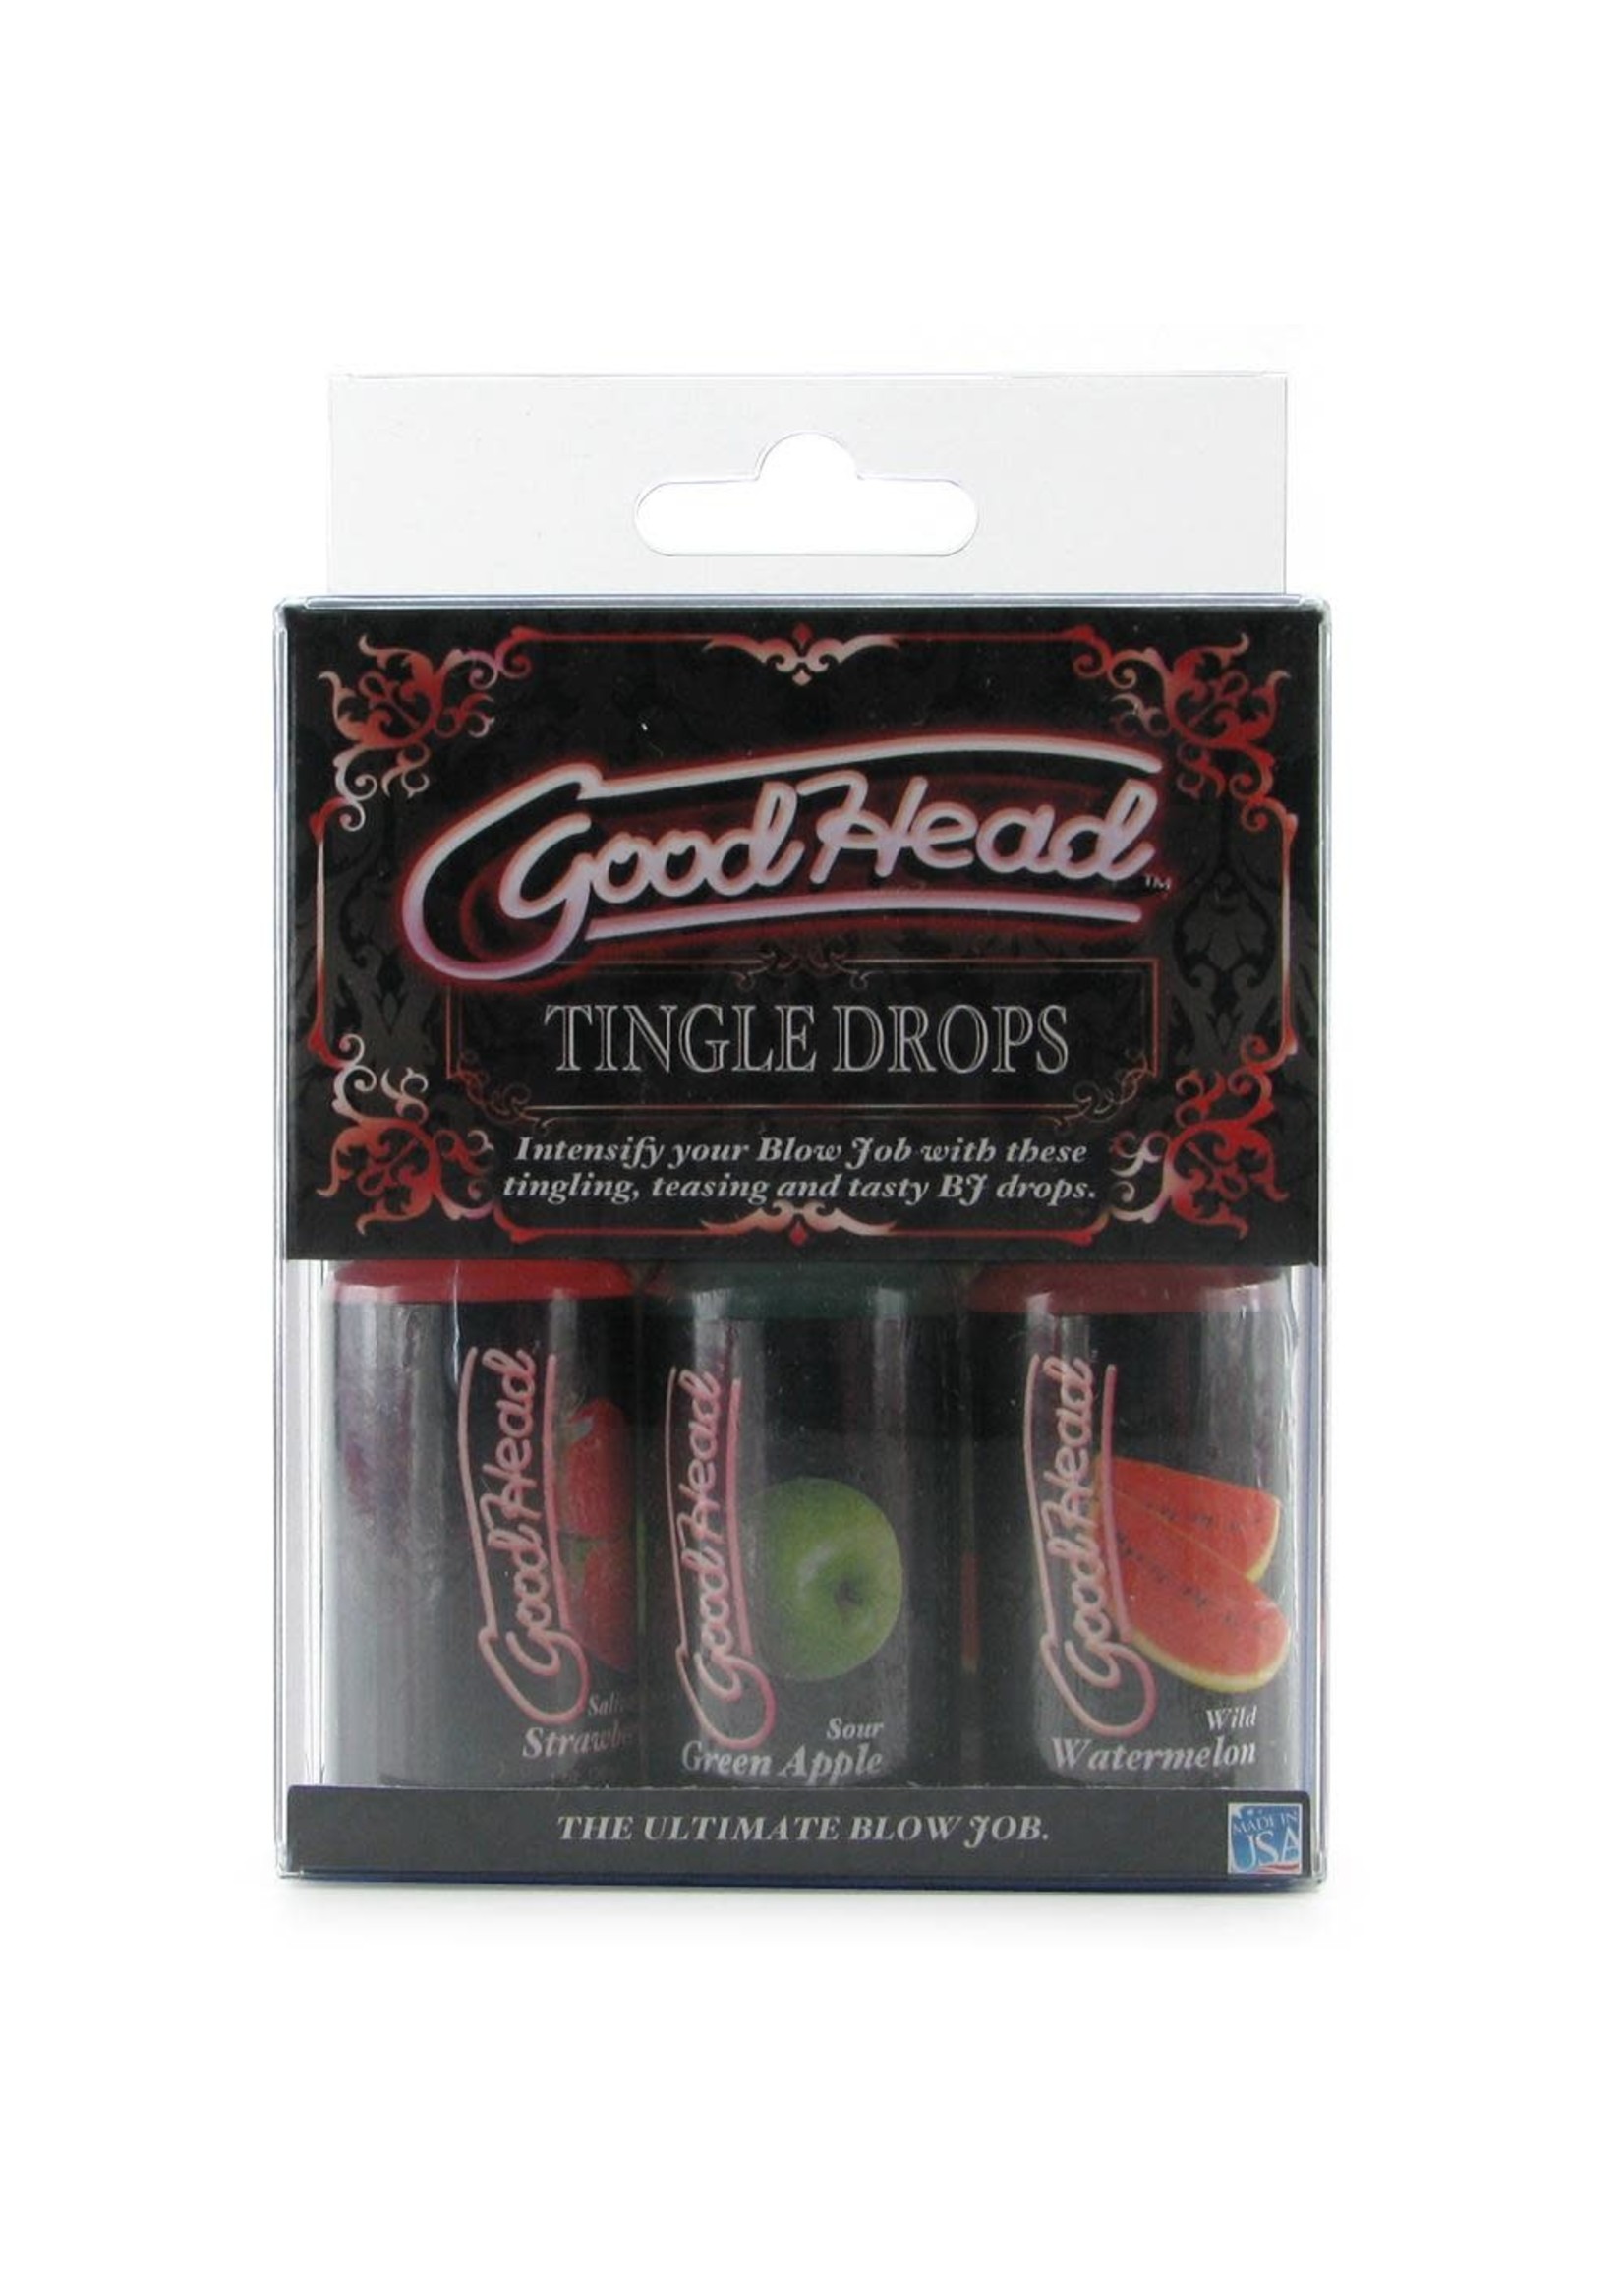 GoodHead Tingle Drops